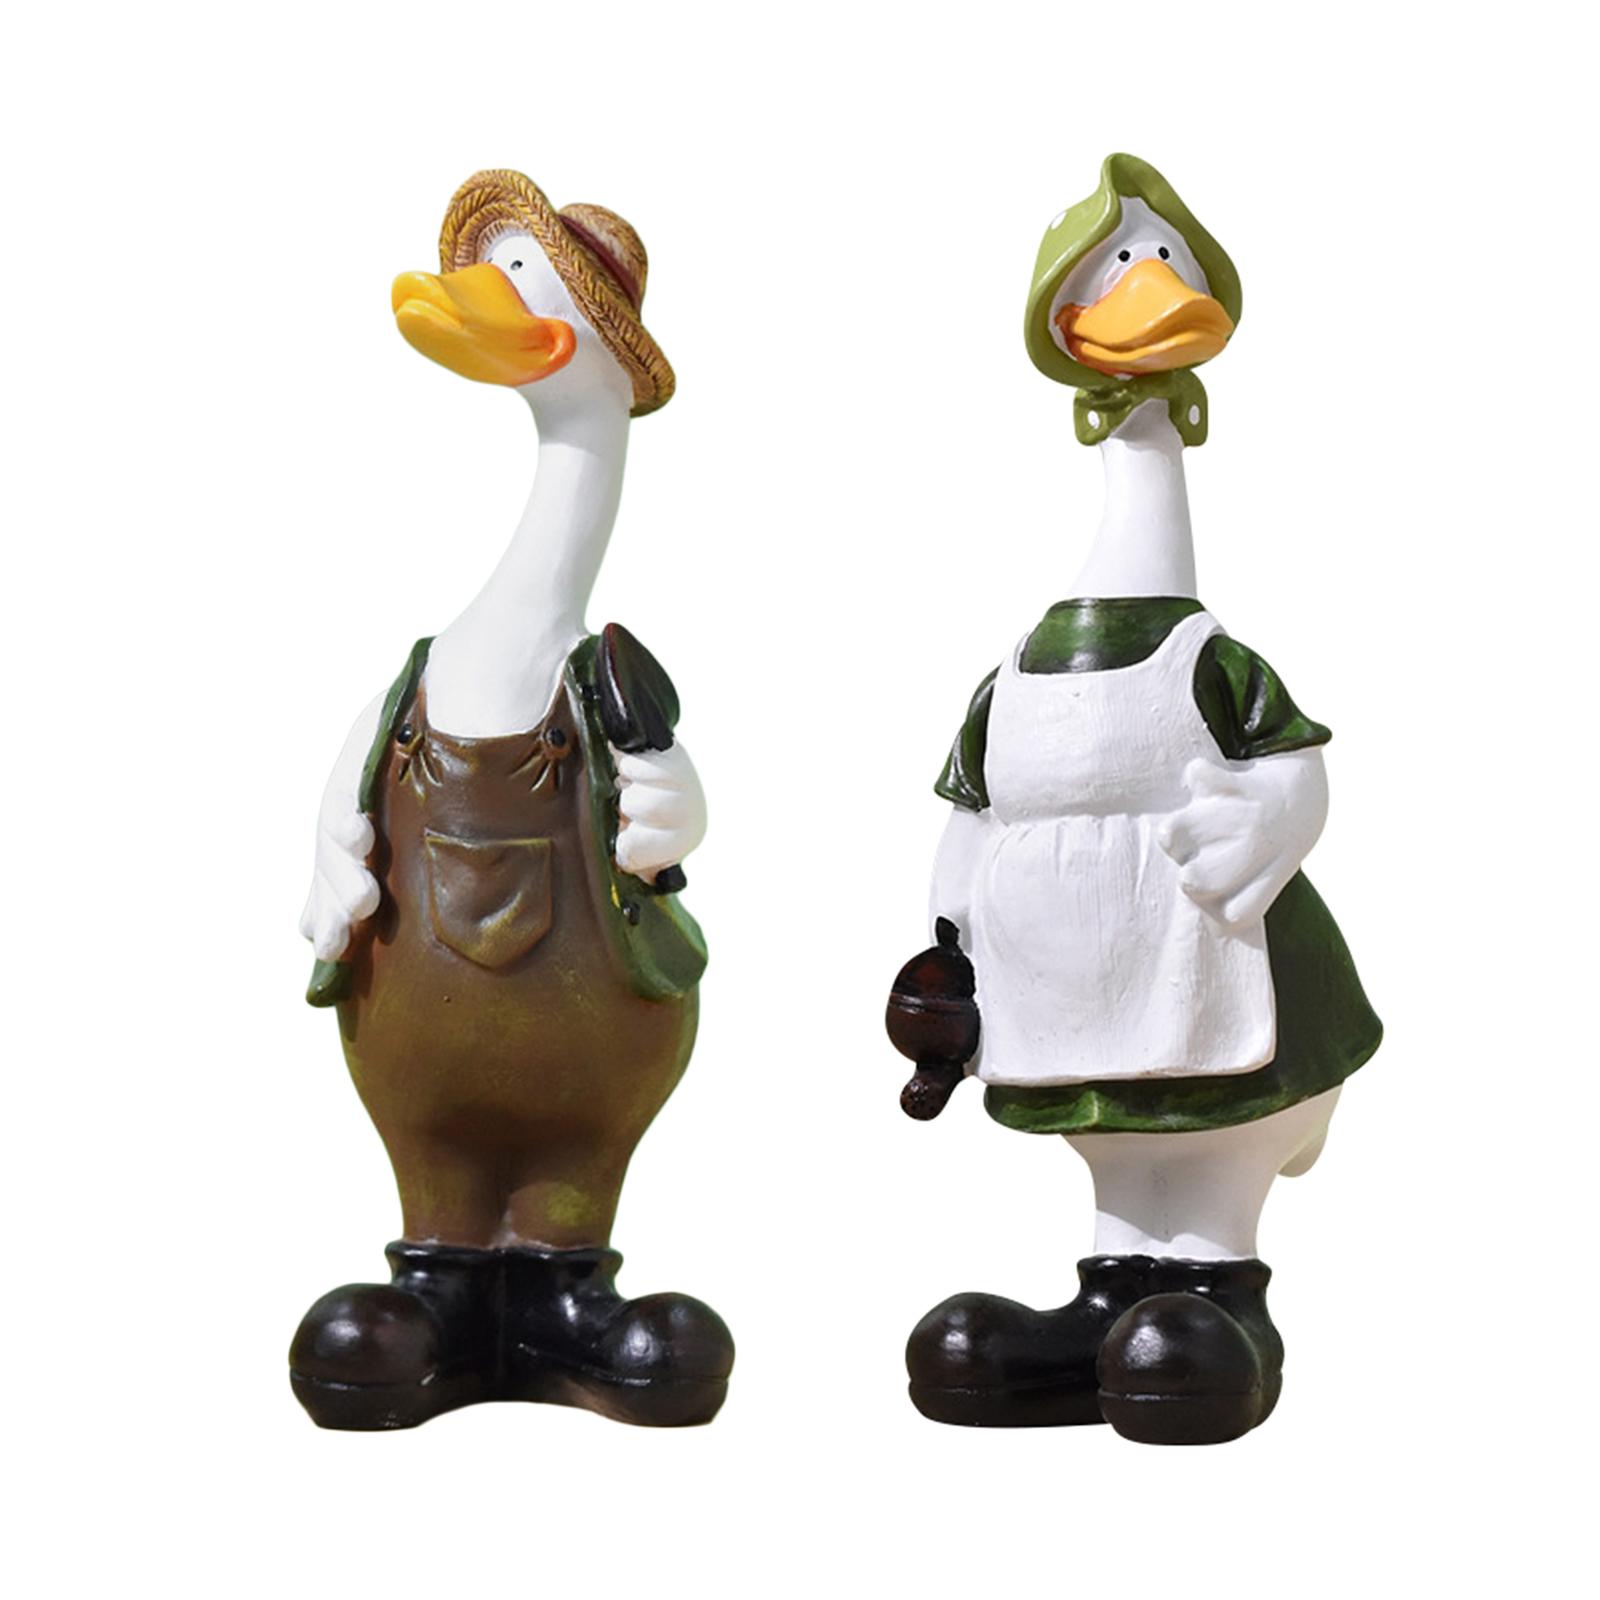 Duck Garden Statues Funny Art Crafts Animal Sculpture for Lawn Patio Desktop mother duck